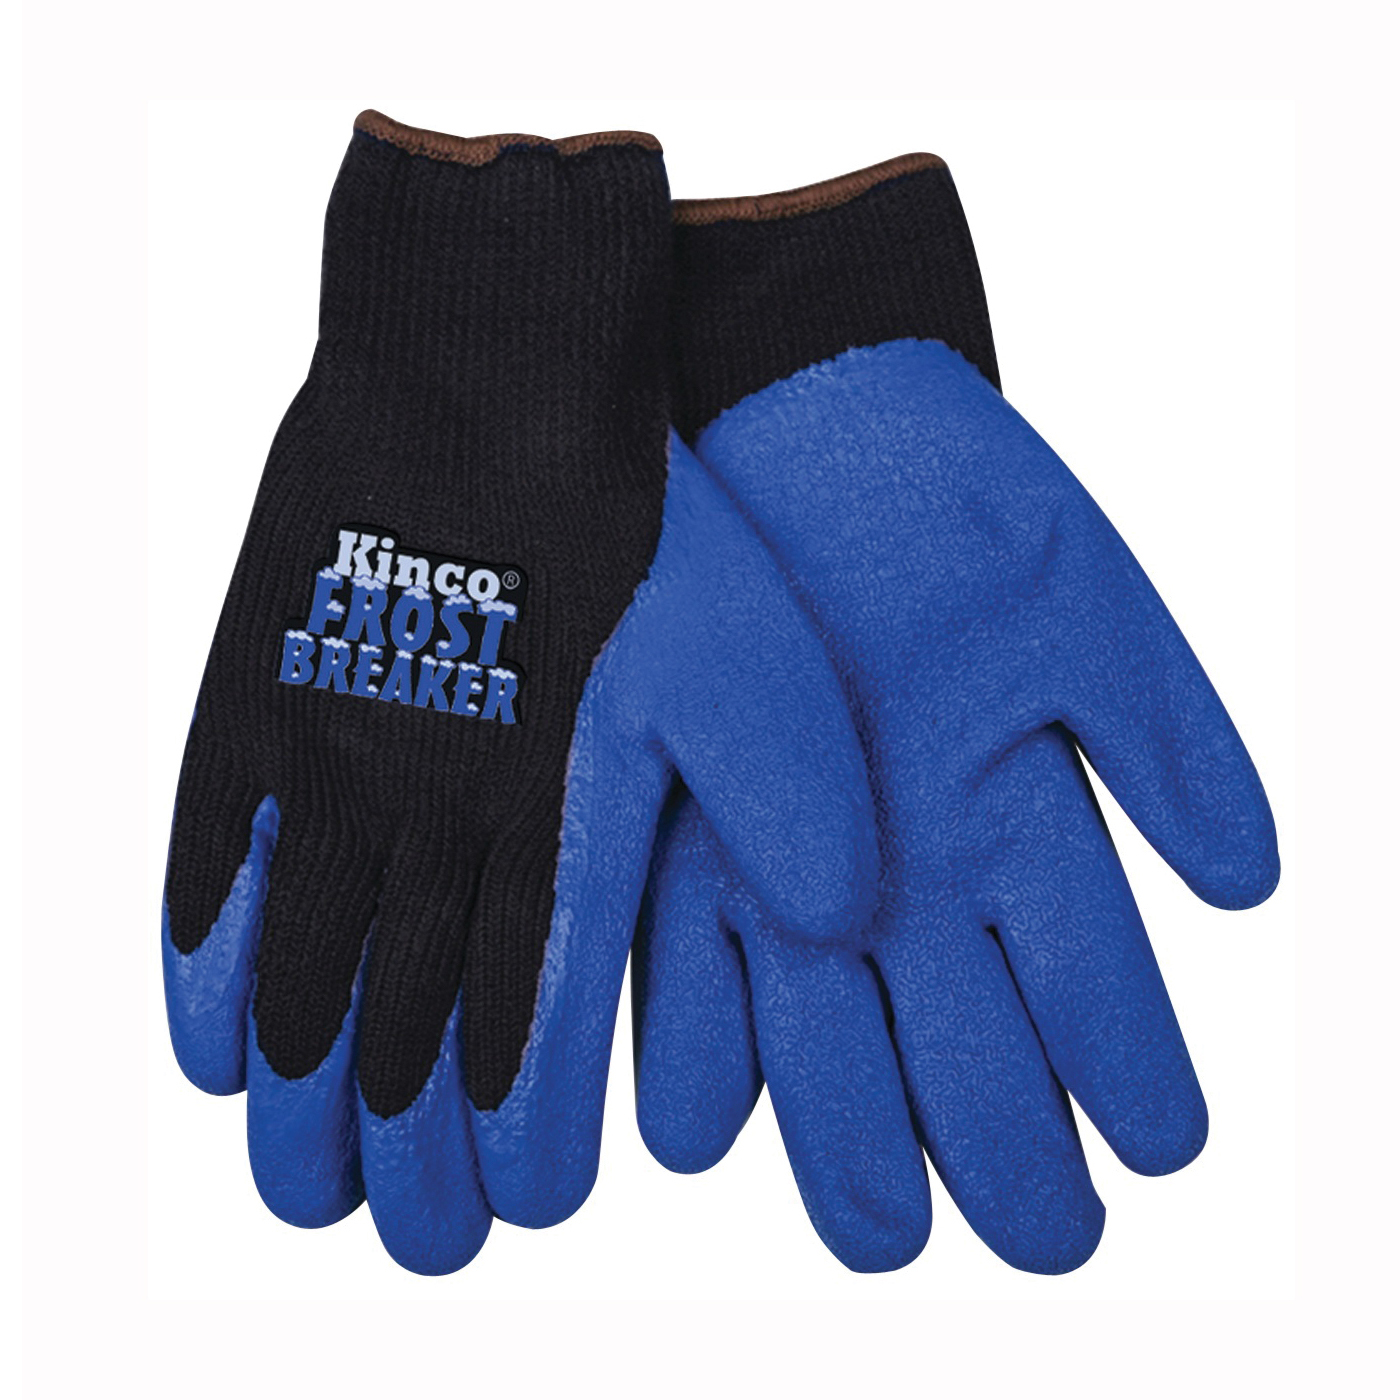 1789-M Protective Gloves, Men's, M, 11 in L, Regular Thumb, Knit Wrist Cuff, Acrylic, Black/Blue